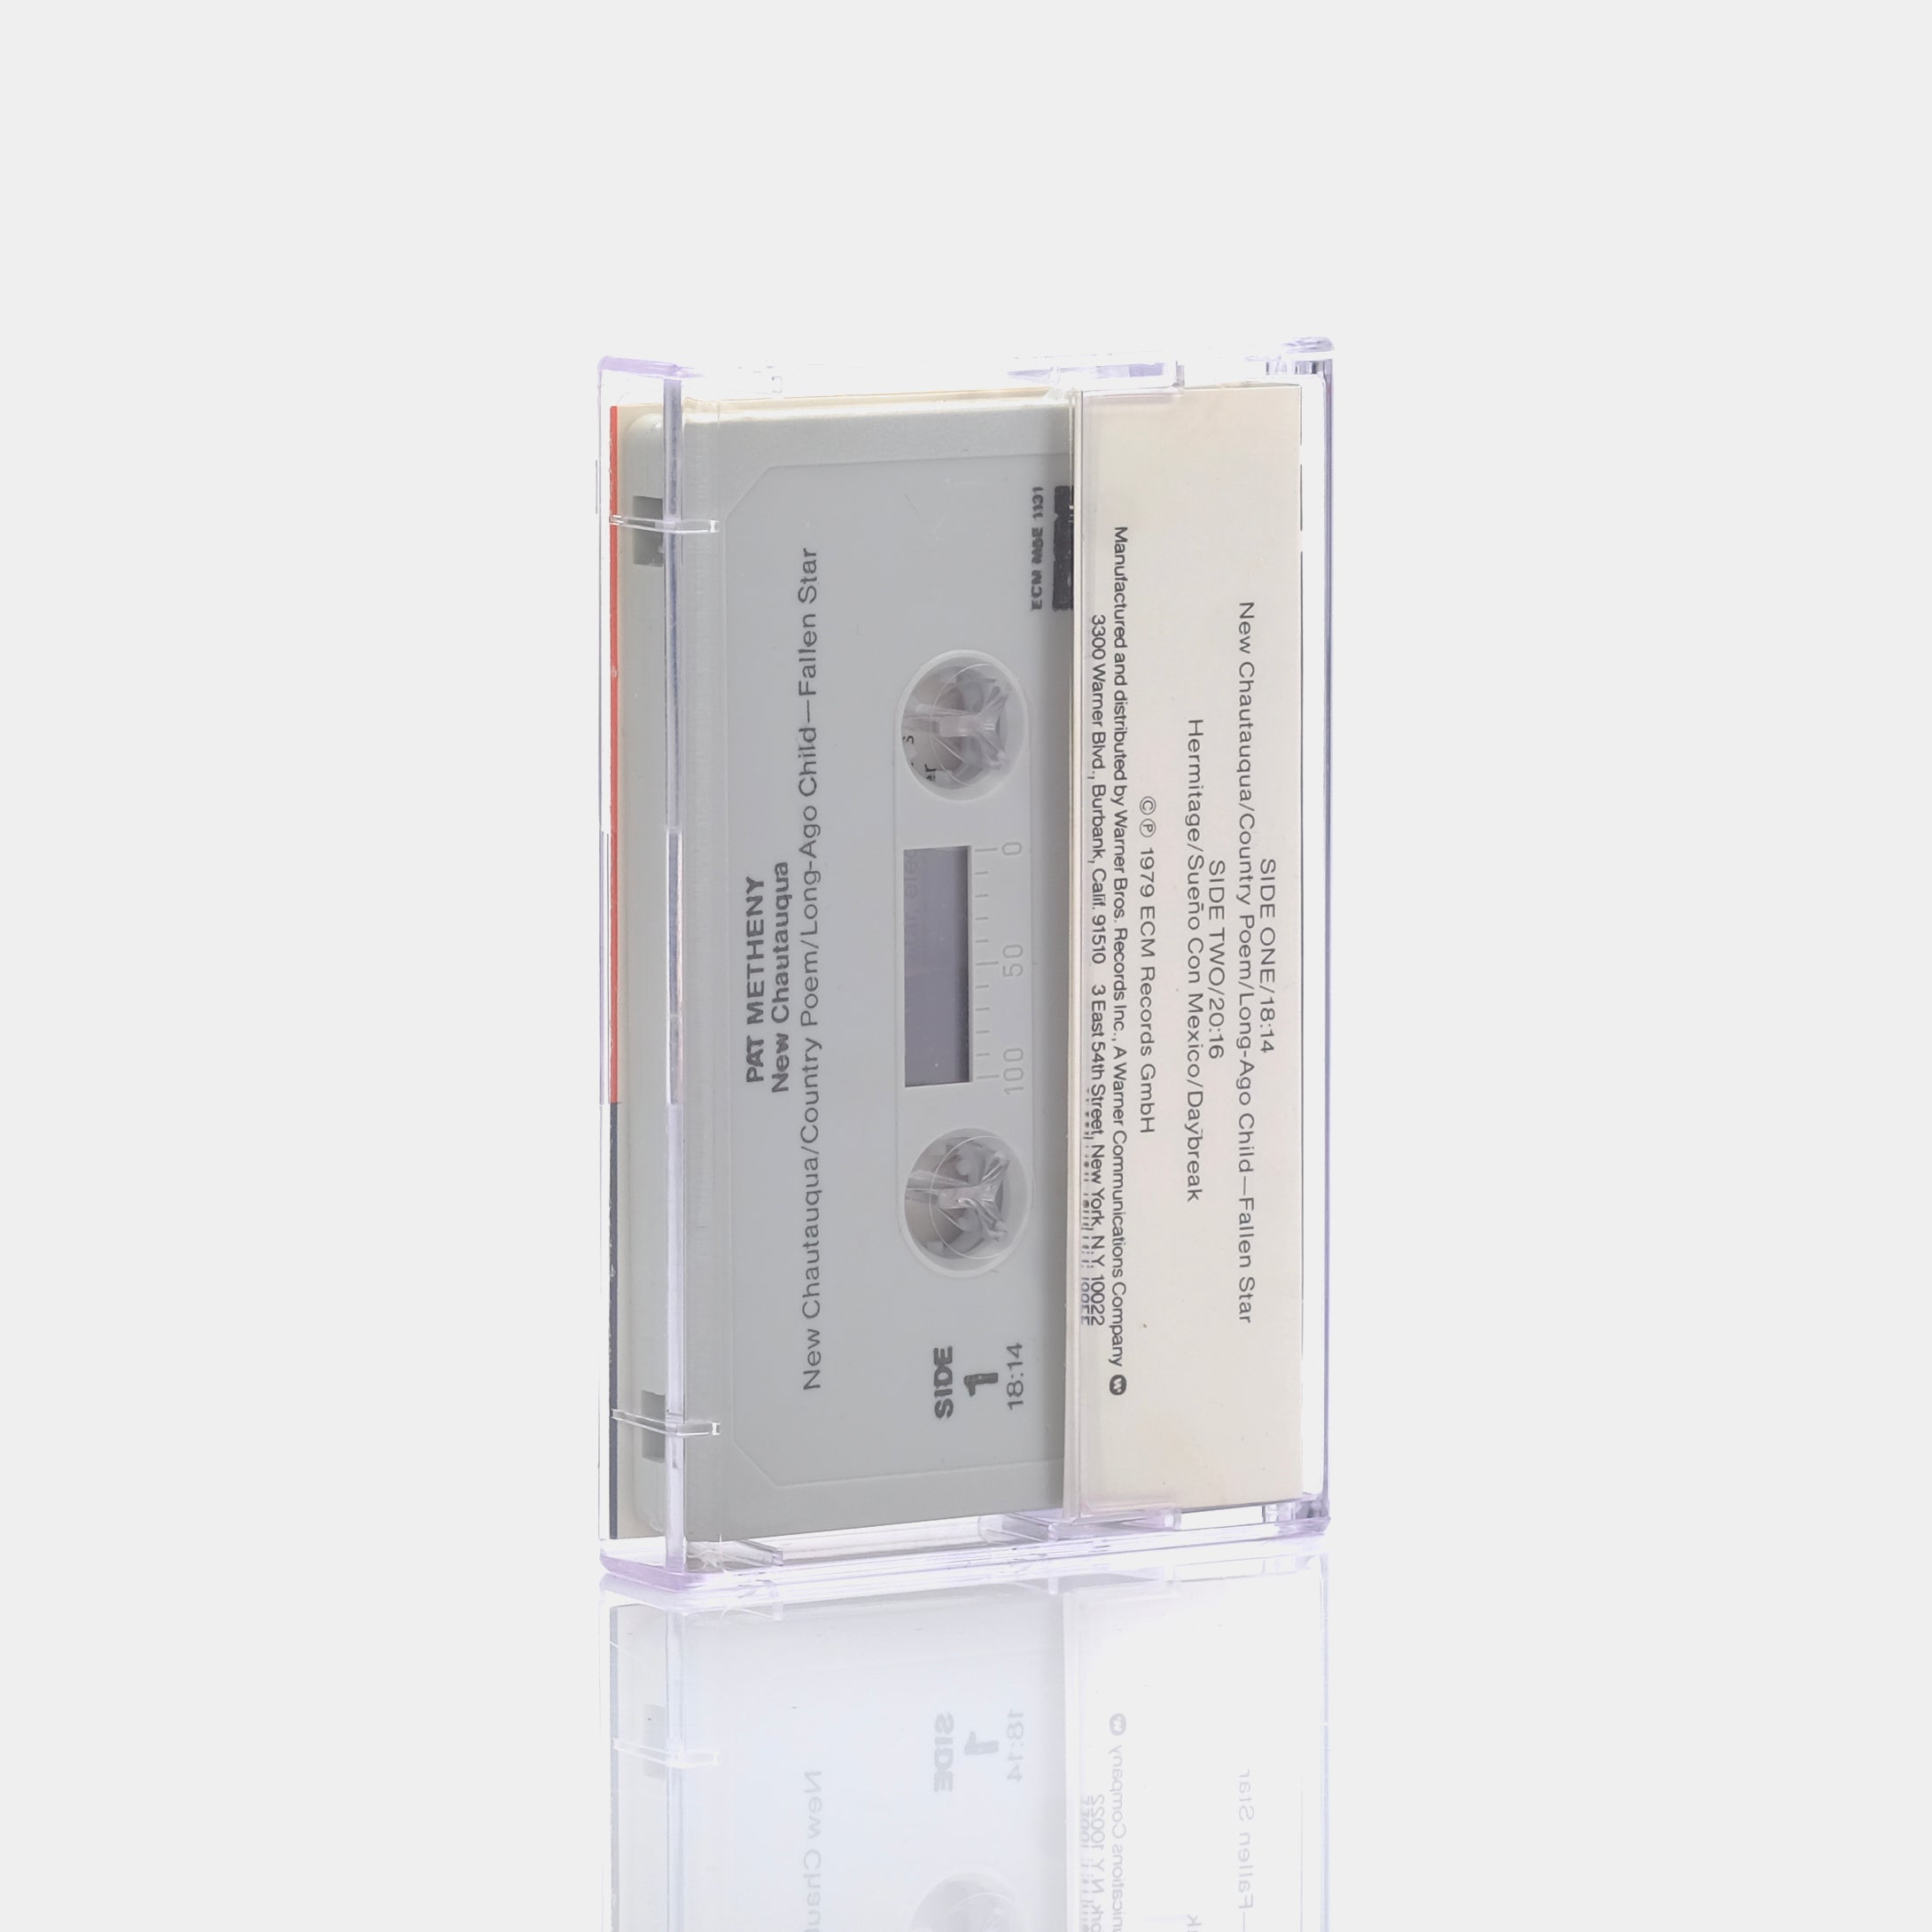 Pat Metheny - New Chautauqua Cassette Tape